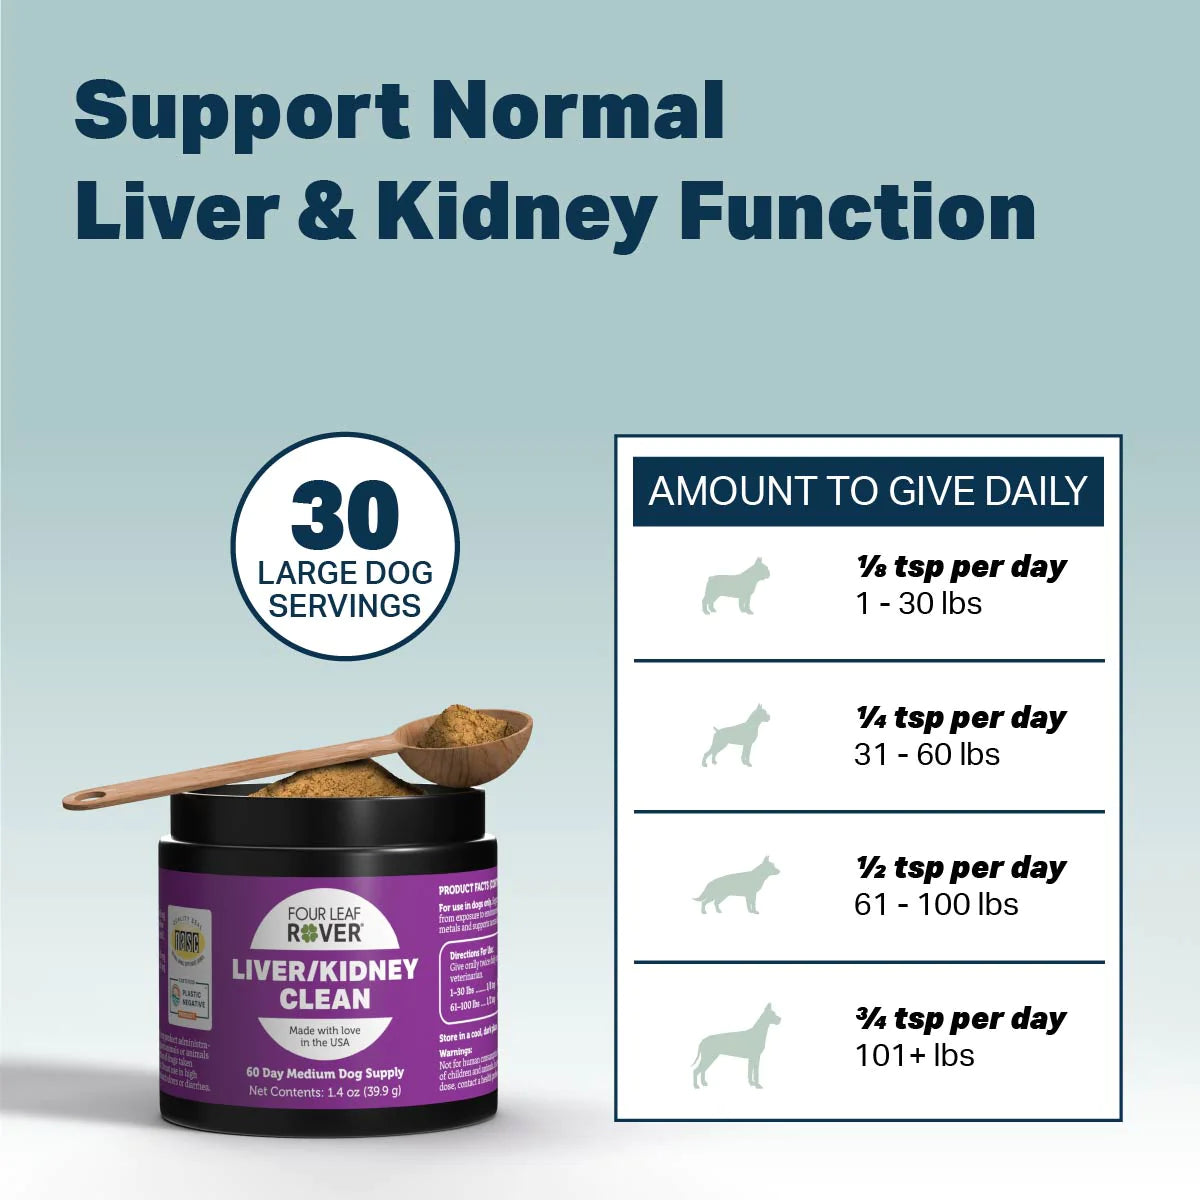 Four Leaf Rover Liver / Kidney Clean